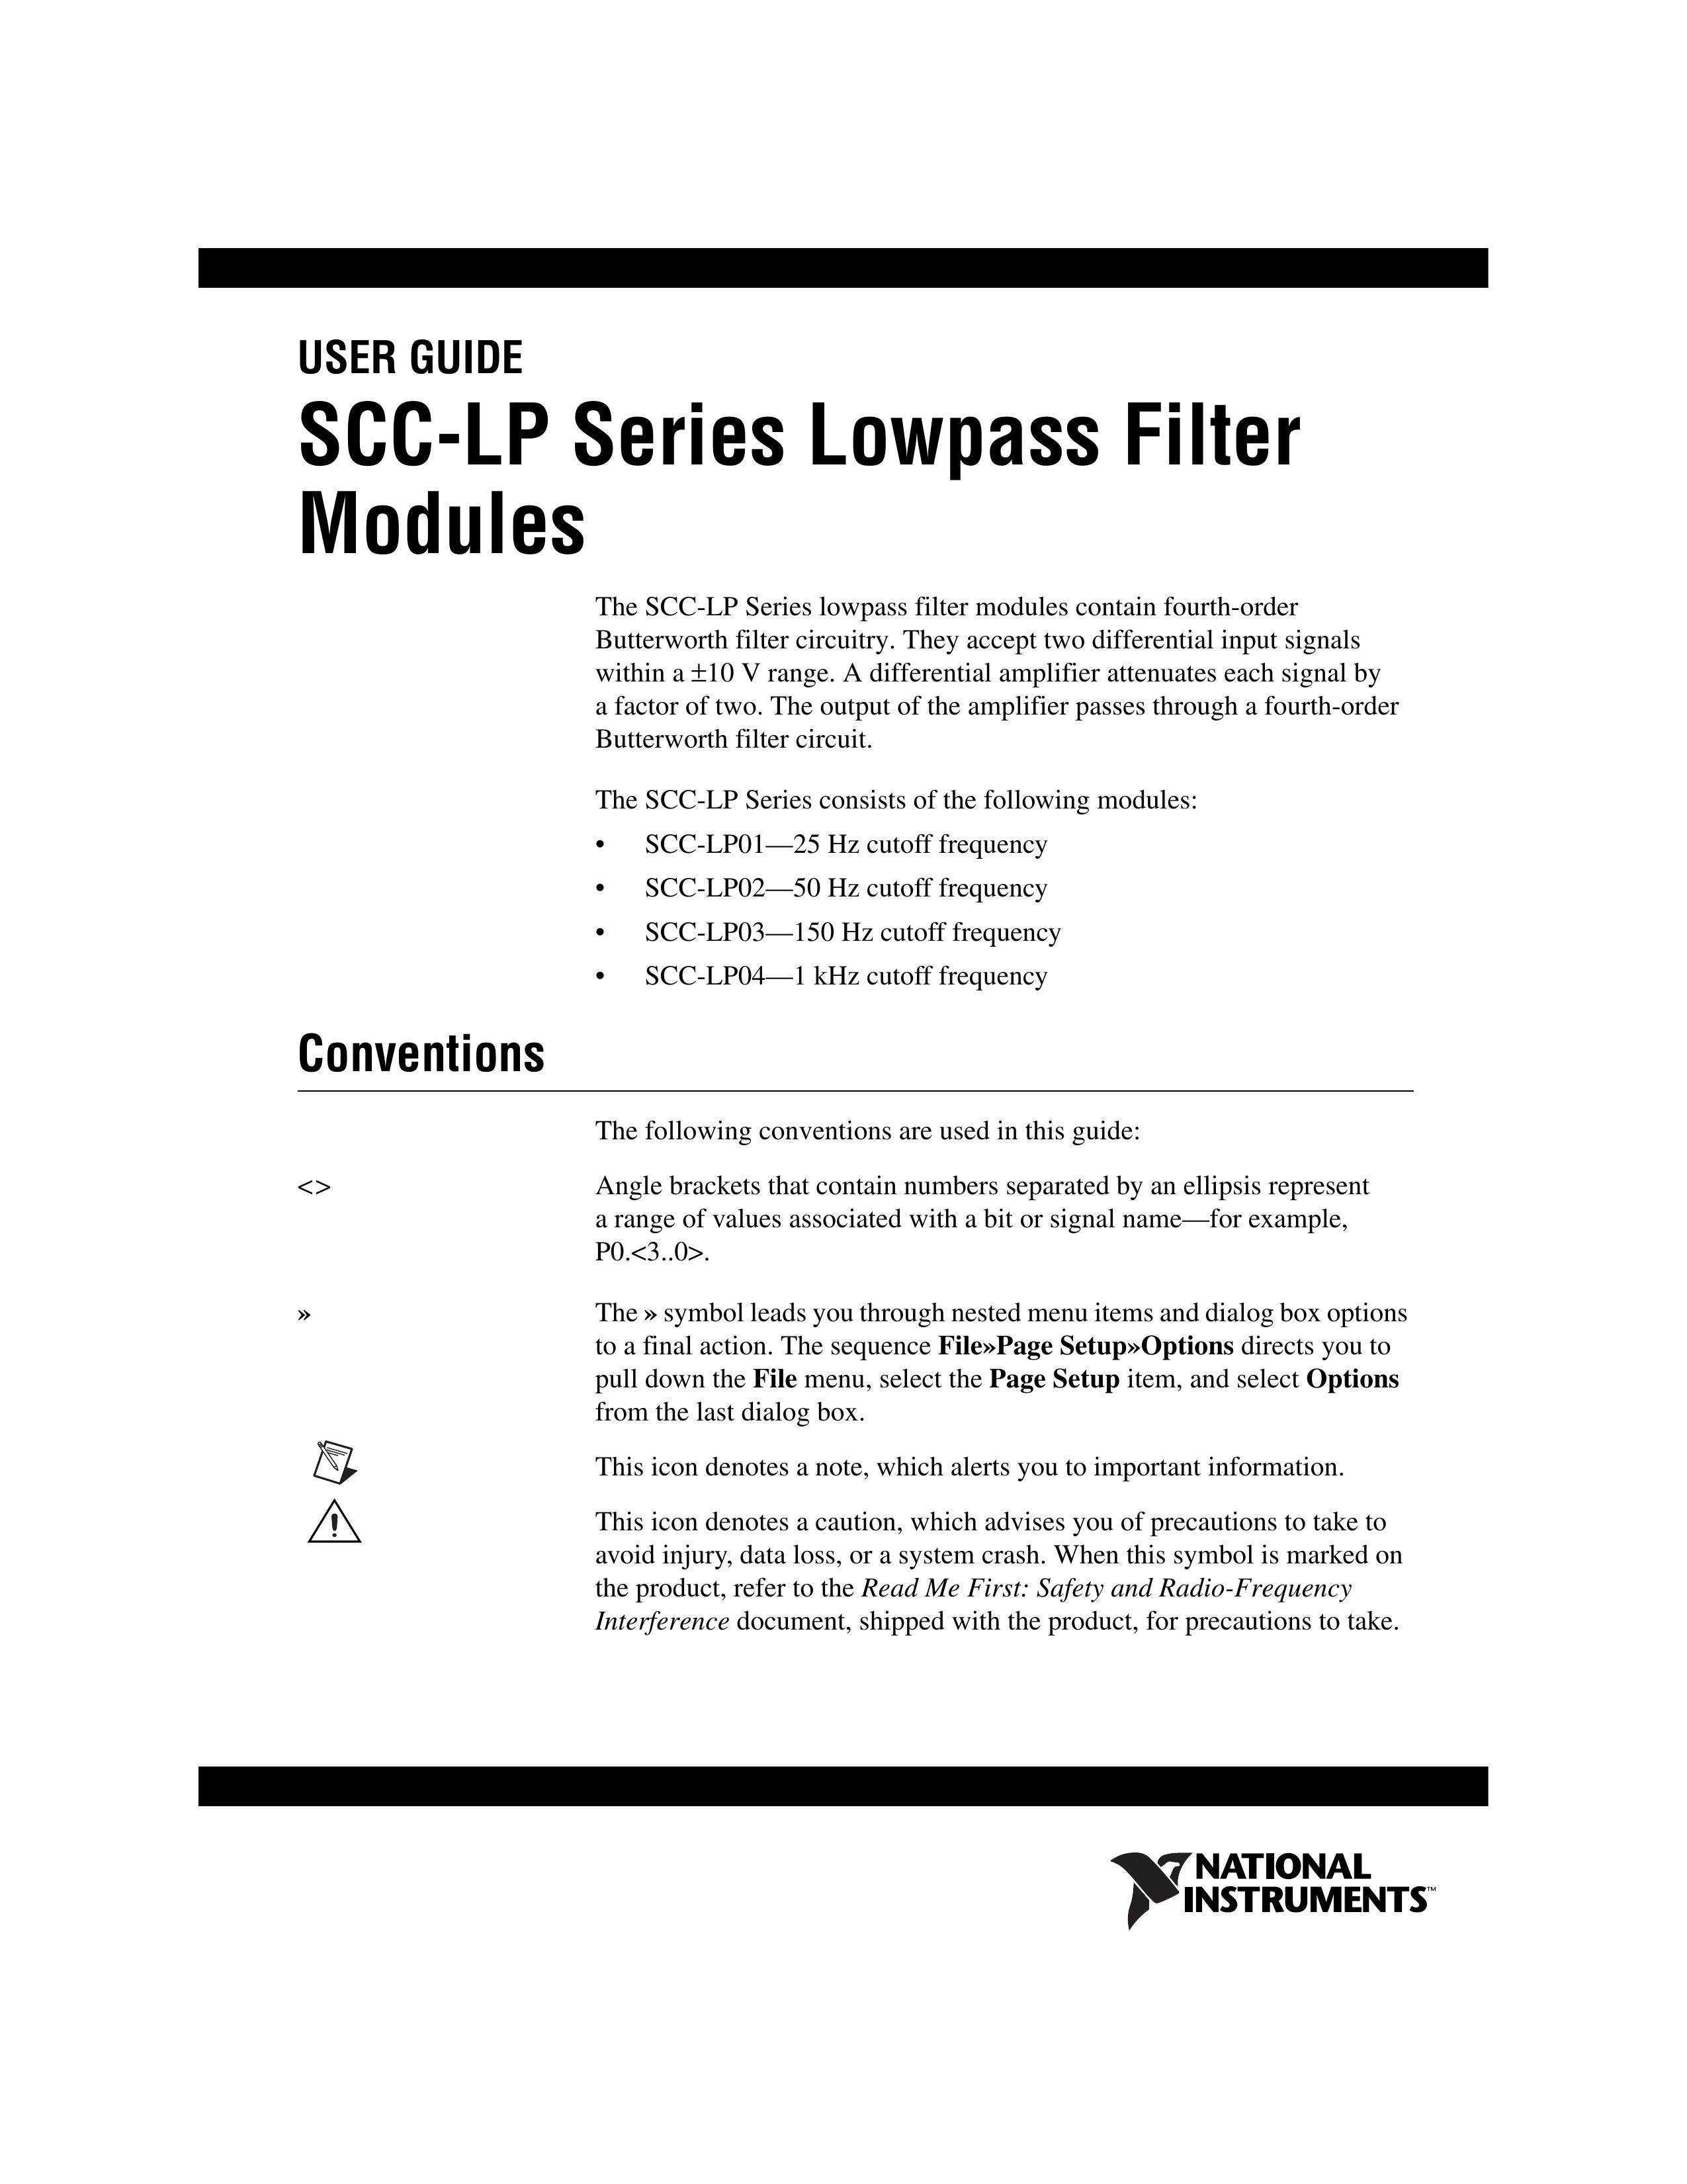 National Instruments SCC-LP03 Dryer Accessories User Manual